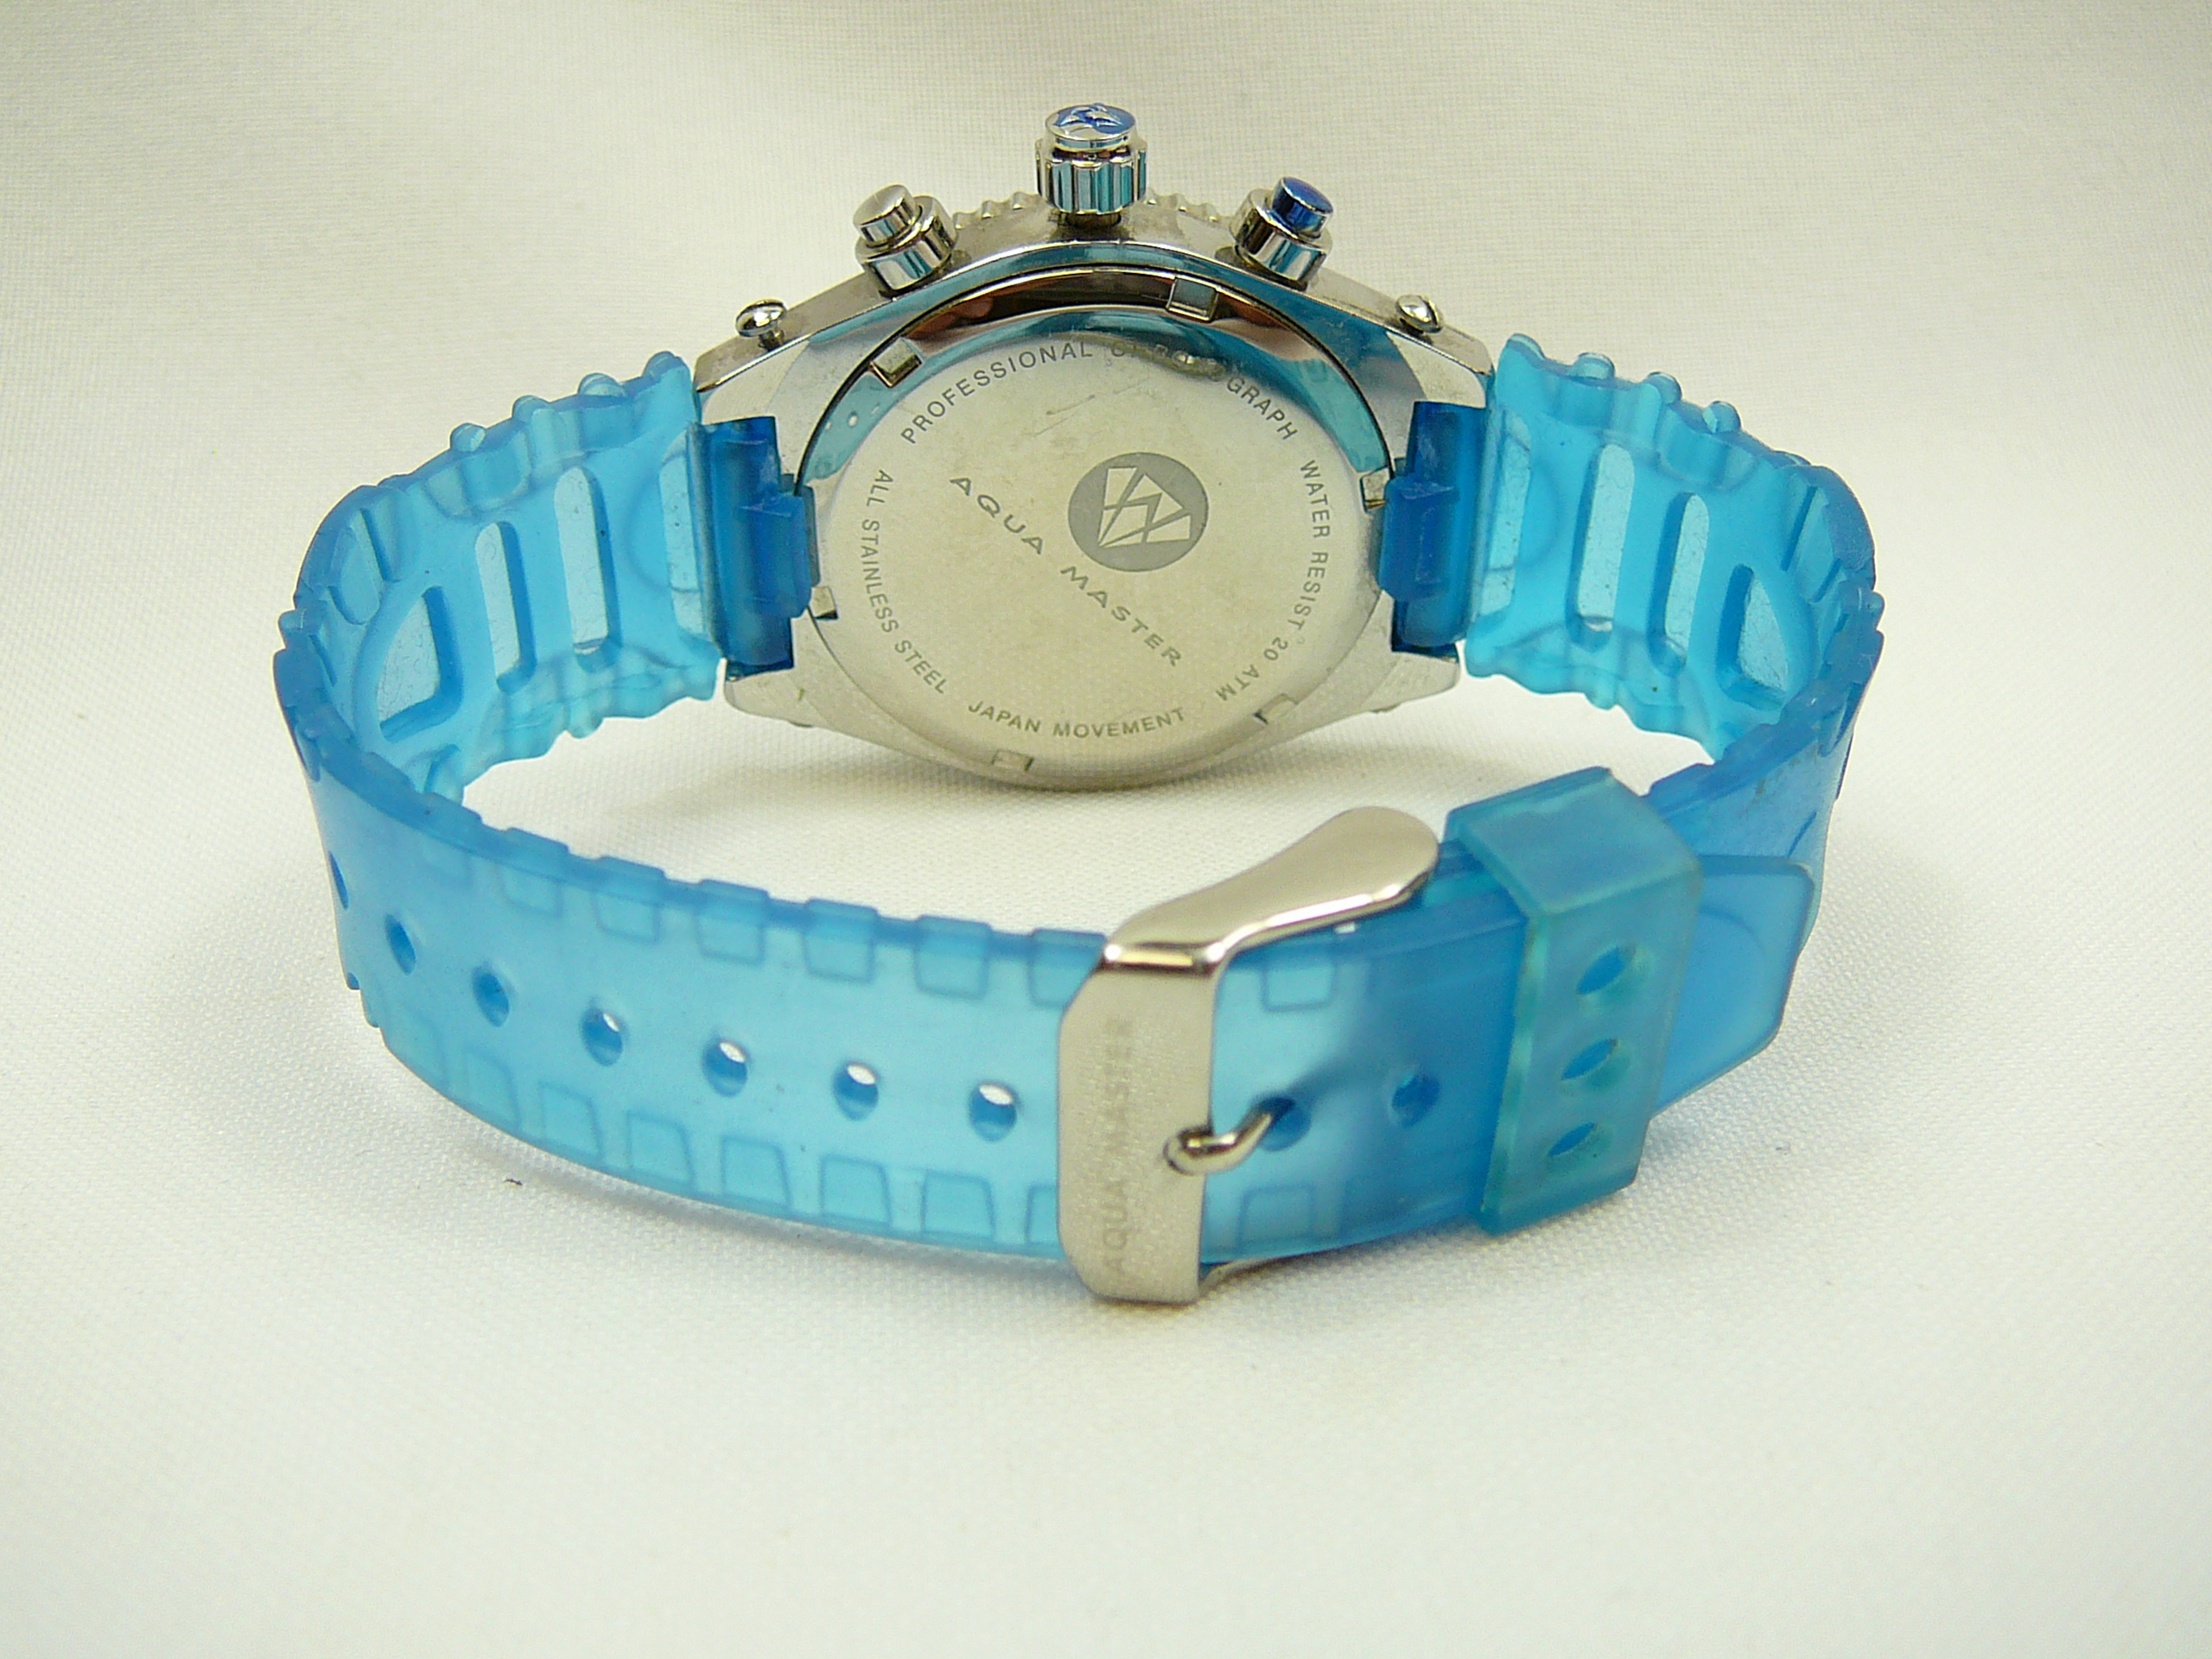 Ladies Aquamaster Wristwatch - Image 3 of 3